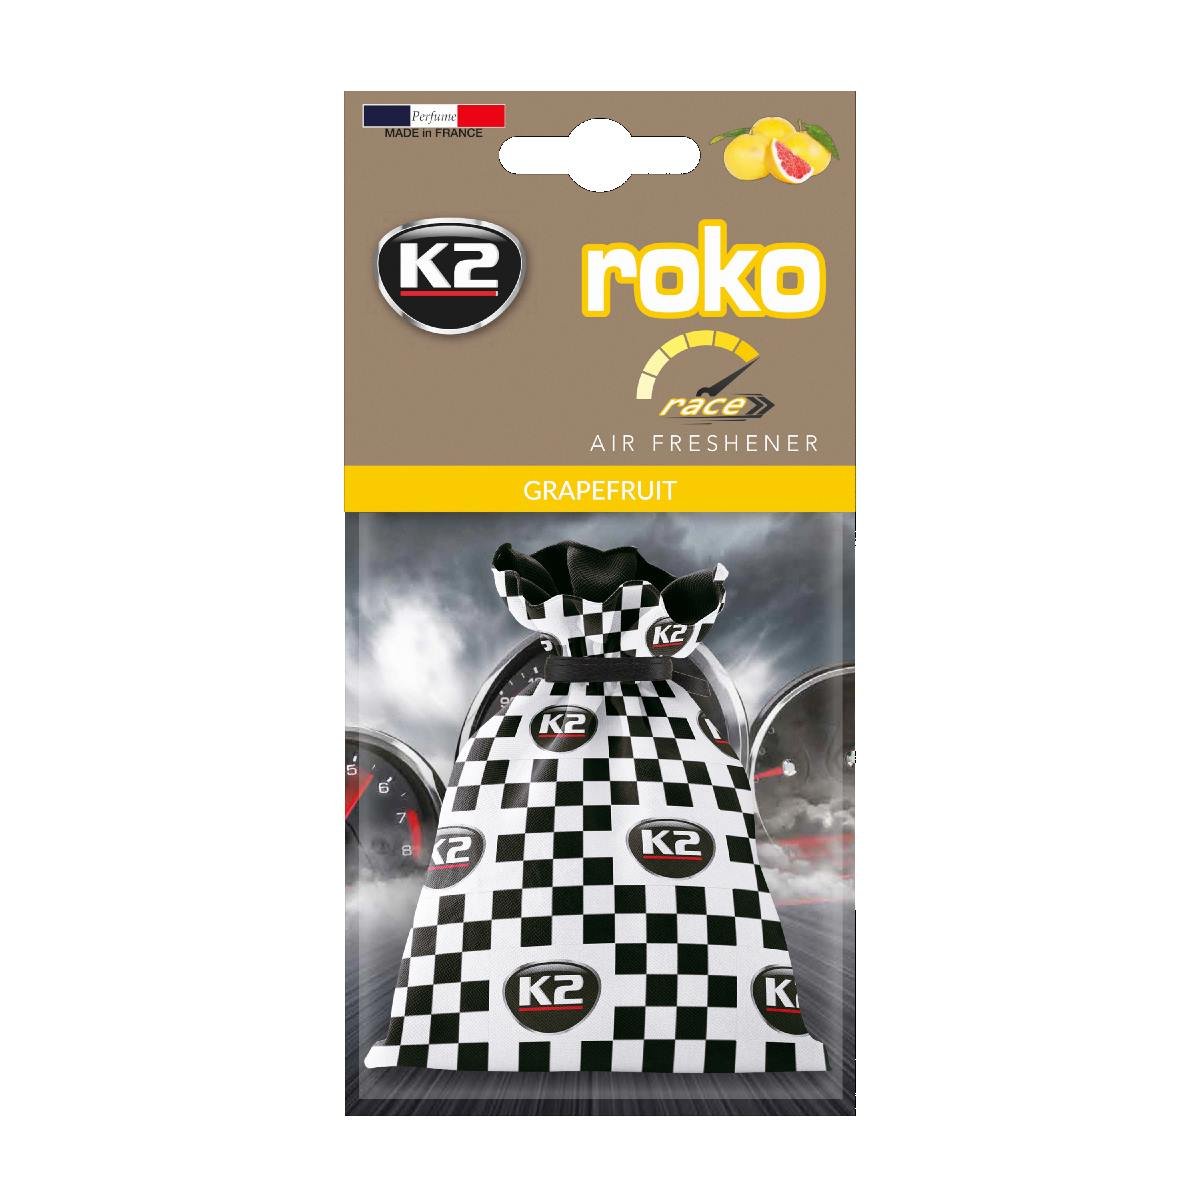 Air fresheners Air freshener ROKO RACE GRAPEFRUIT  Art. K2V824R